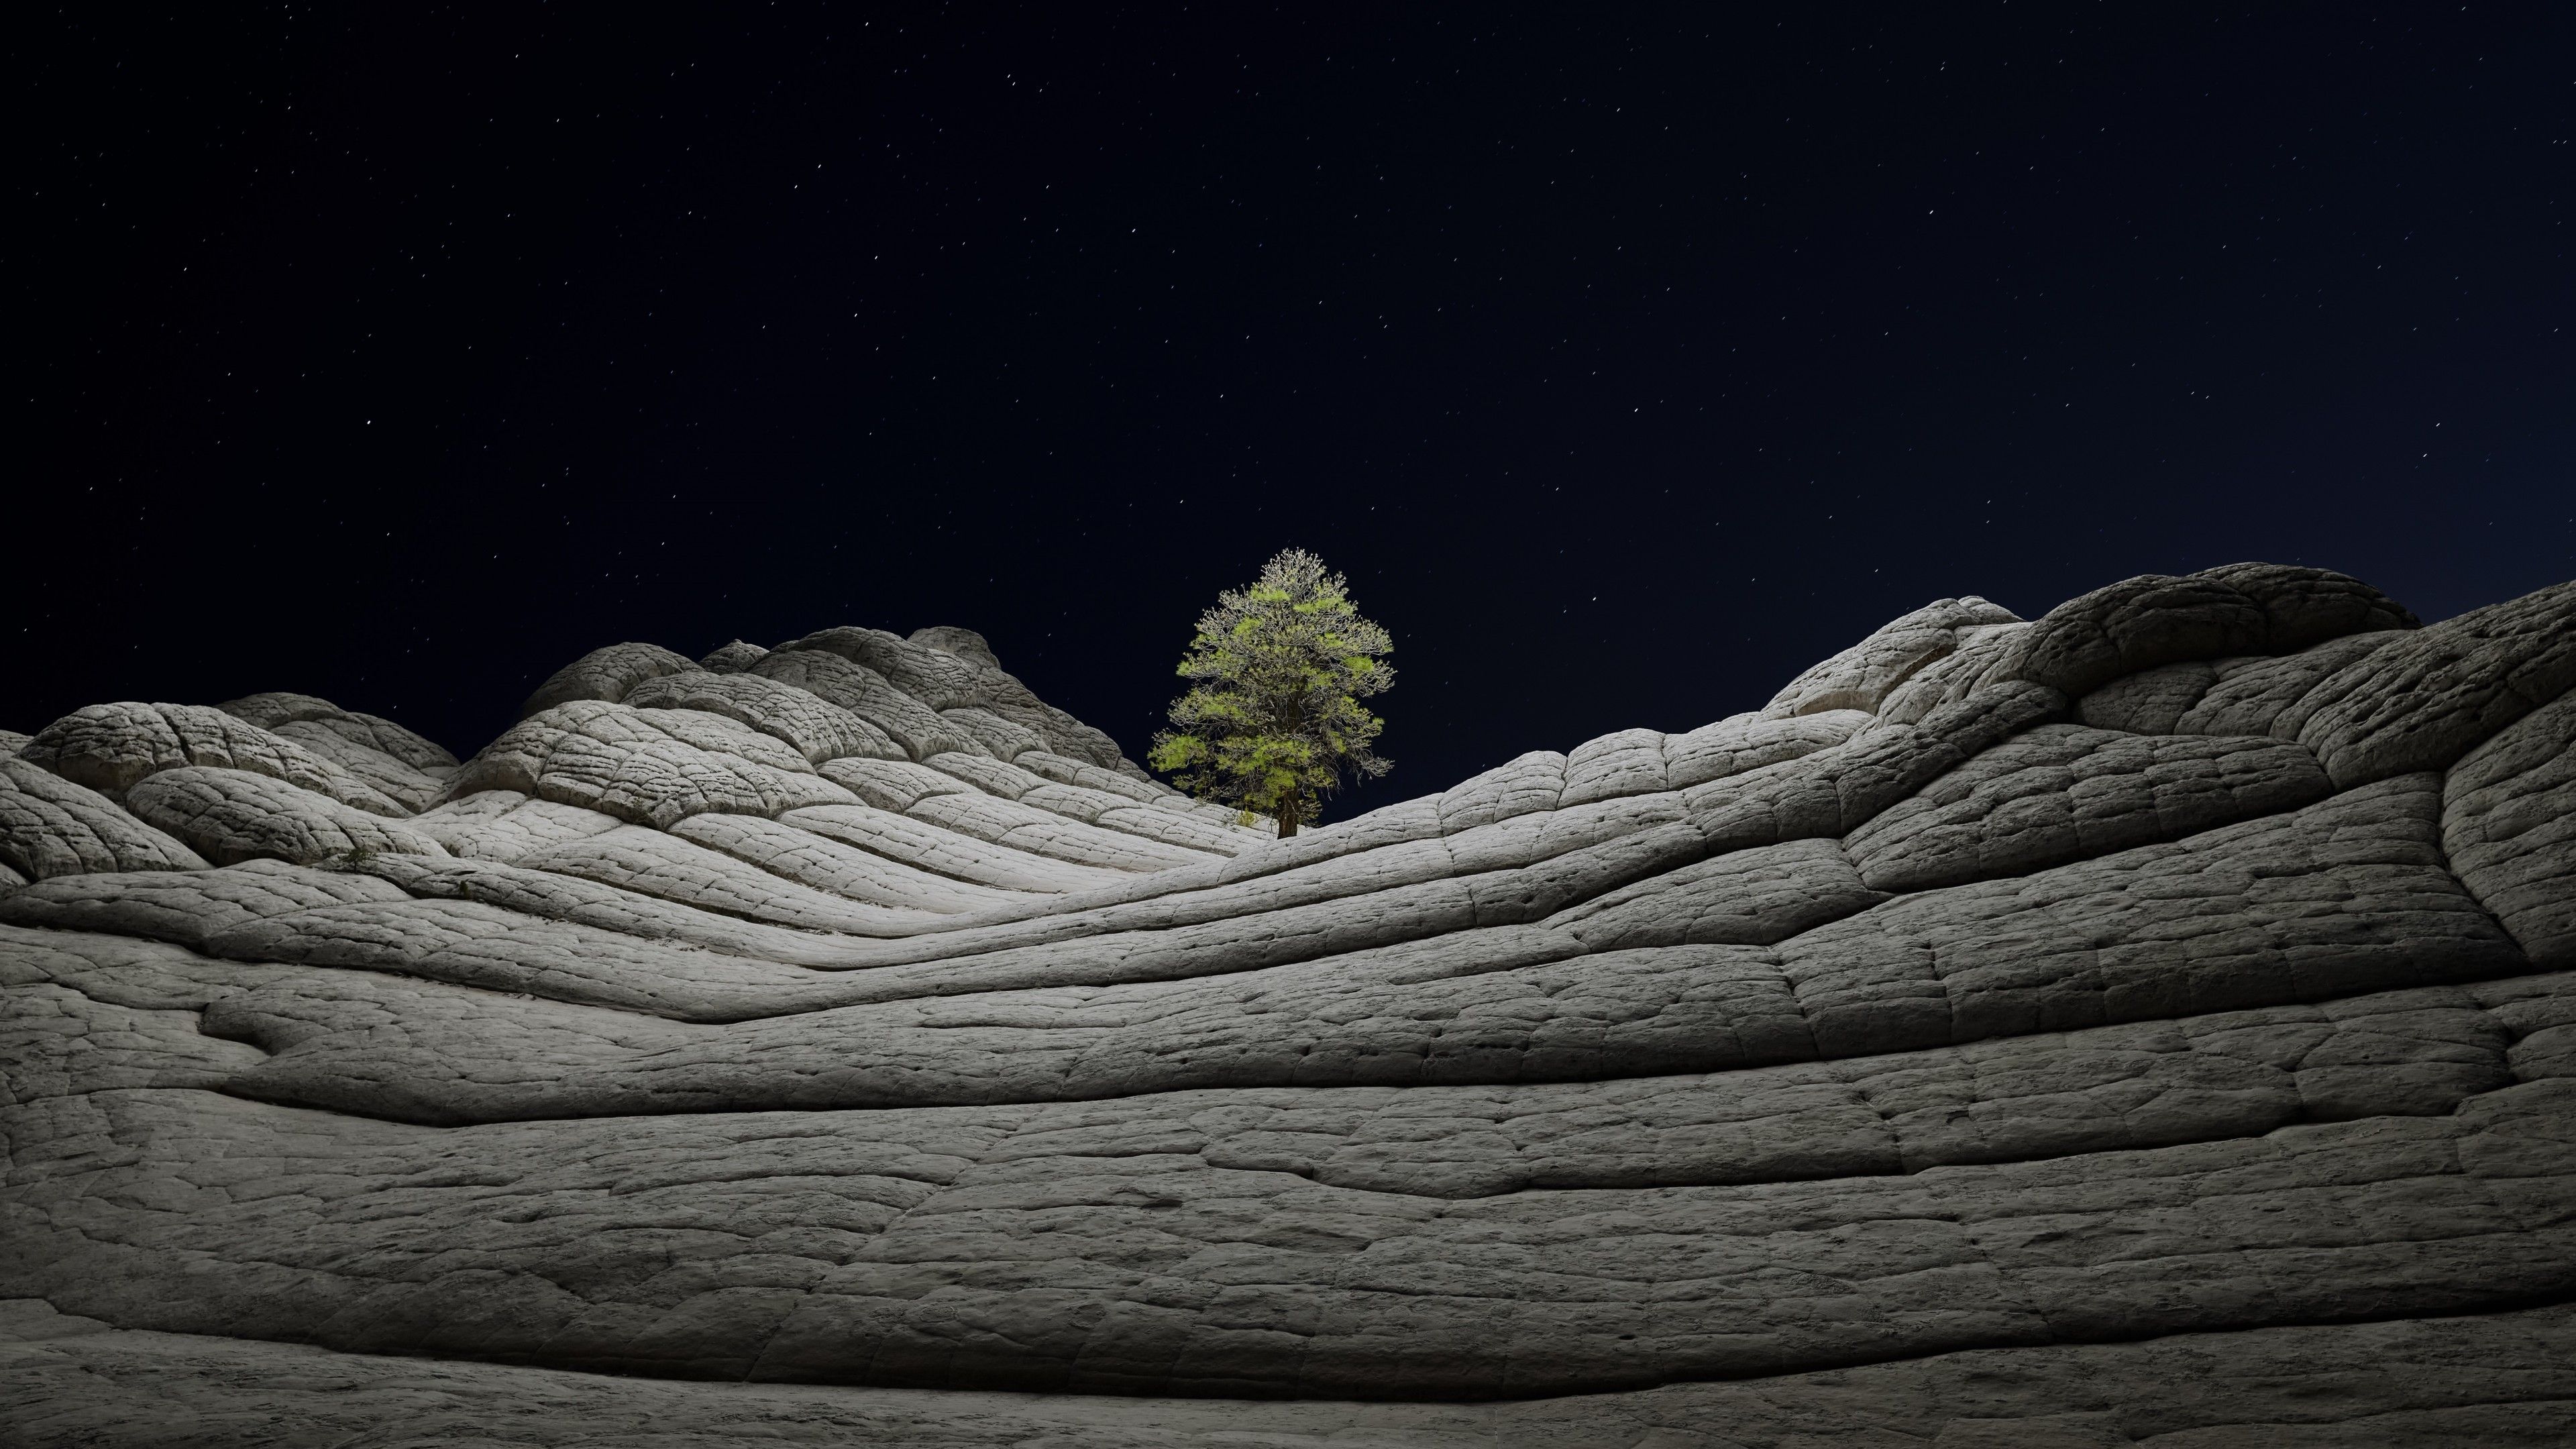 macOS Big Sur 4K Wallpaper, Stock, Night, Lone tree, Sedimentary rocks, Starry sky, Dark, iOS 5K, Nature